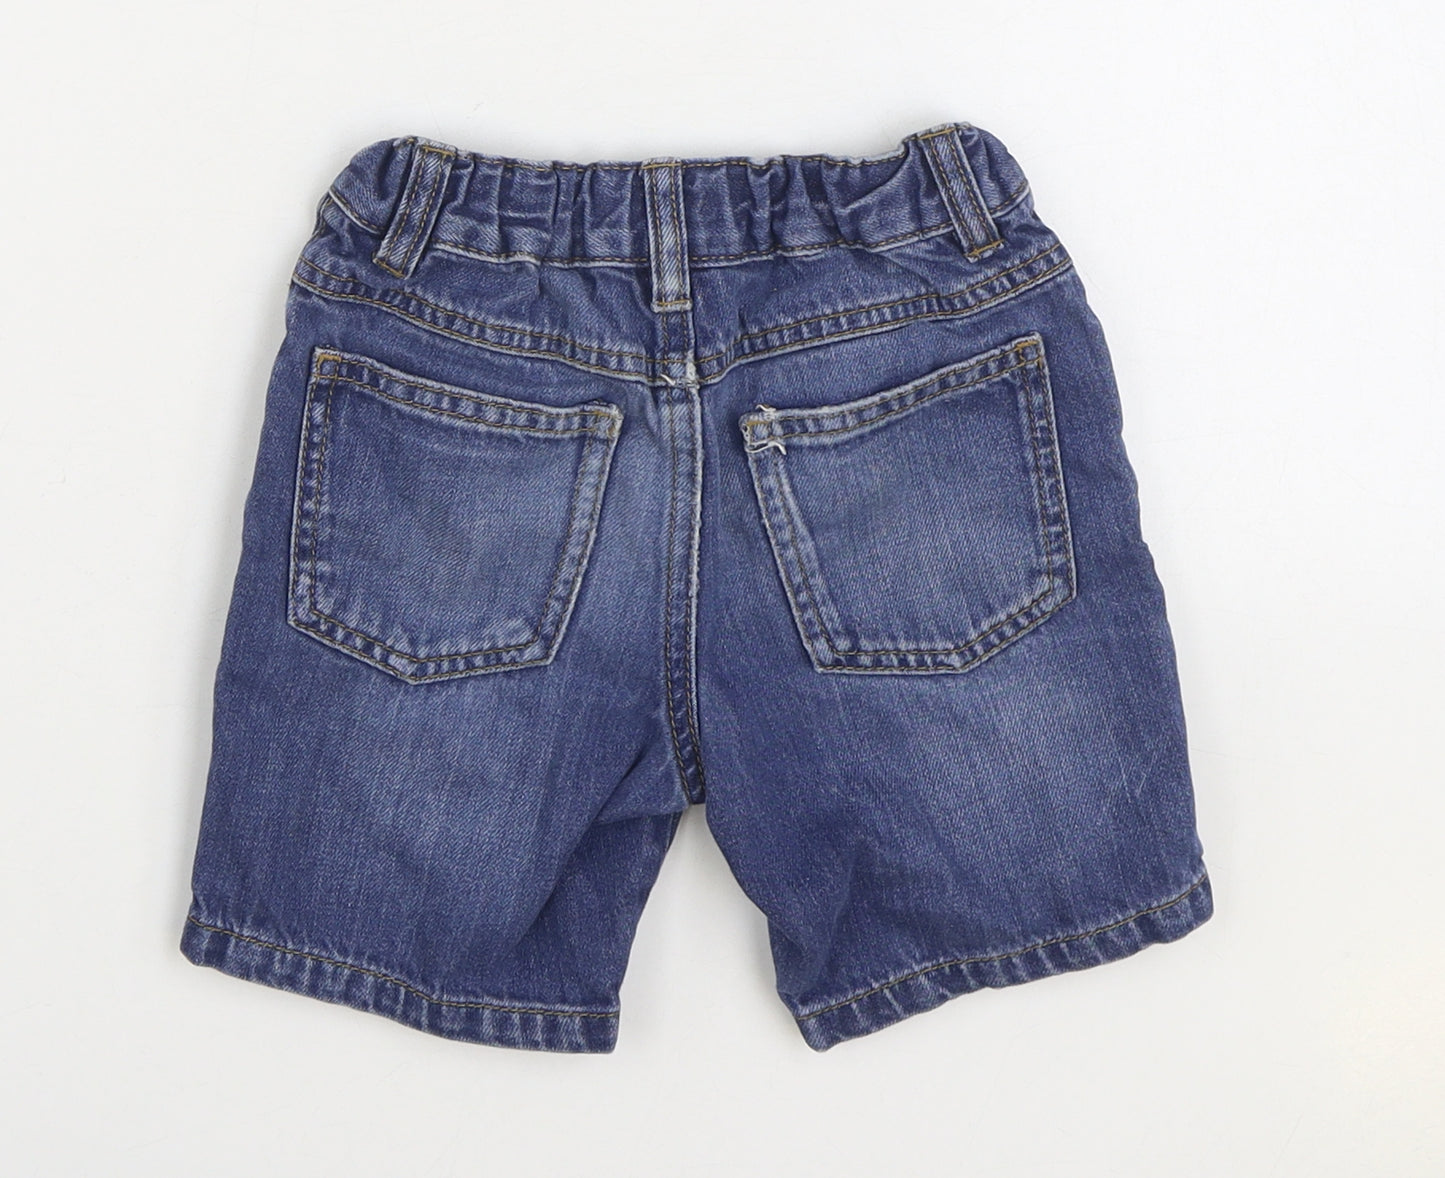 NEXT Boys Blue Cotton Bermuda Shorts Size 4-5 Years Regular Zip